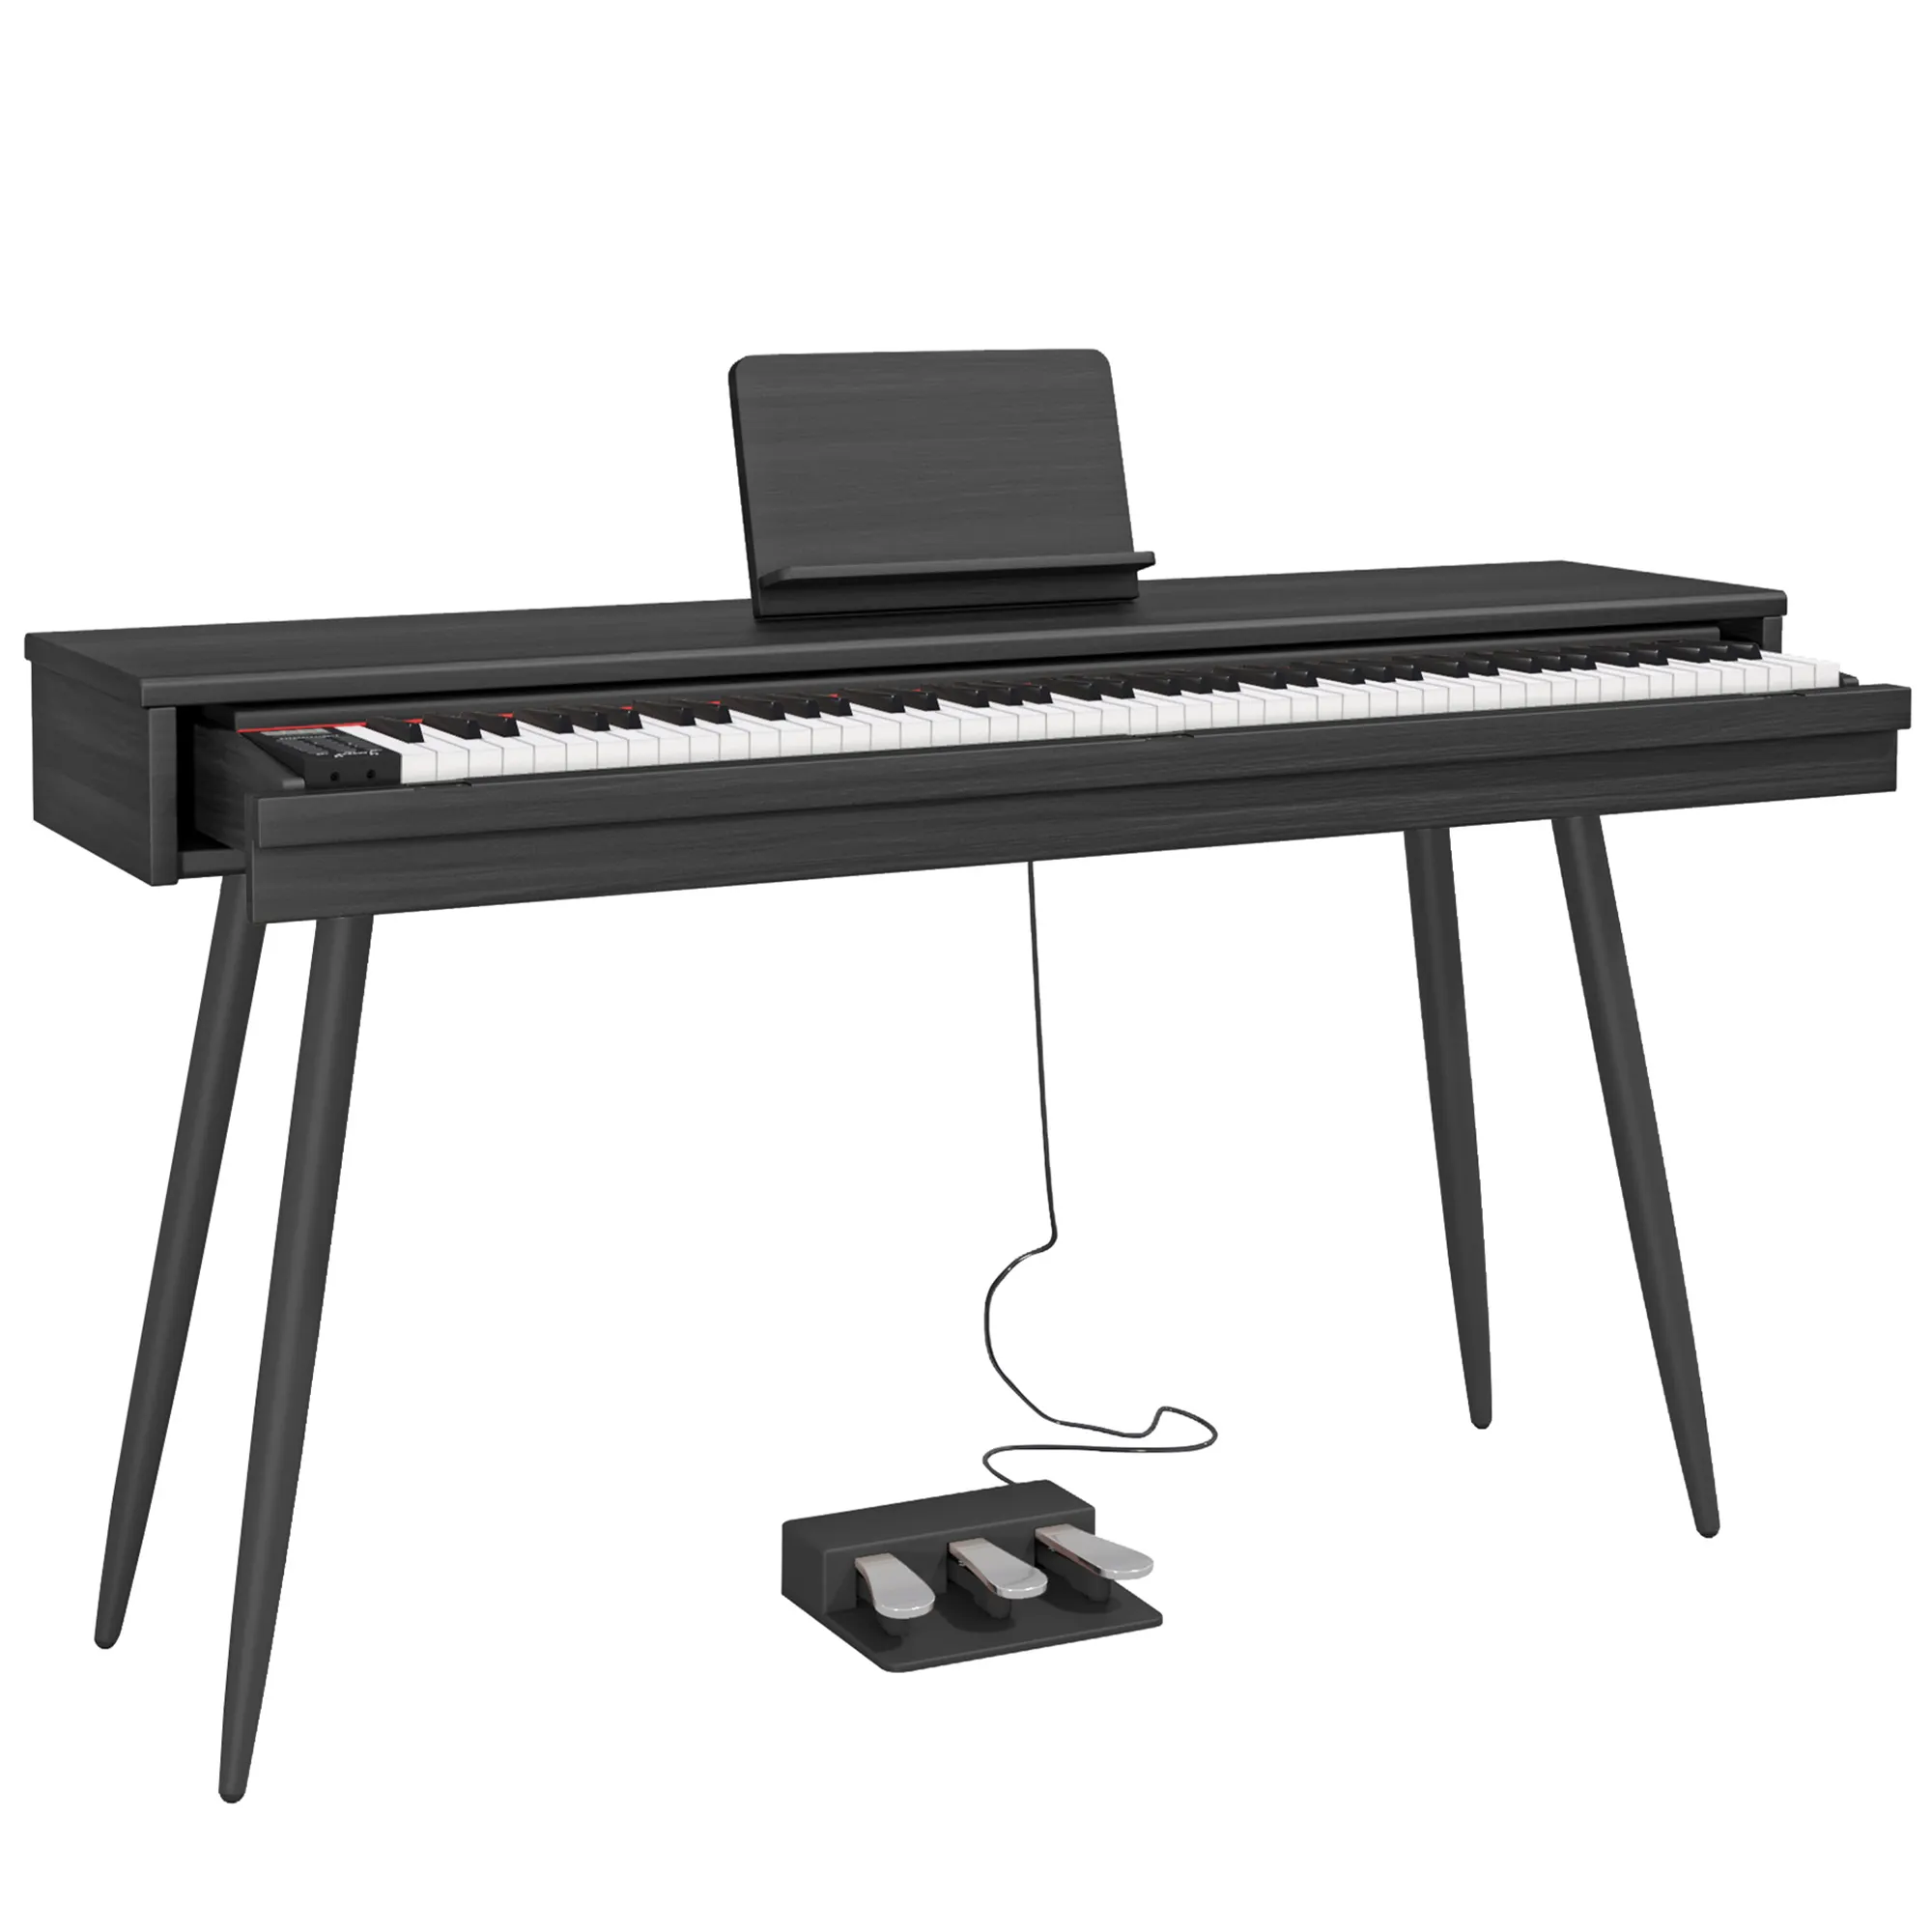 ब्लैंथ ड्रॉअर पियानो कीबोर्ड इलेक्ट्रॉनिक पियानो डिजिटल पियानो इलेक्ट्रिक संगीत वाद्ययंत्र